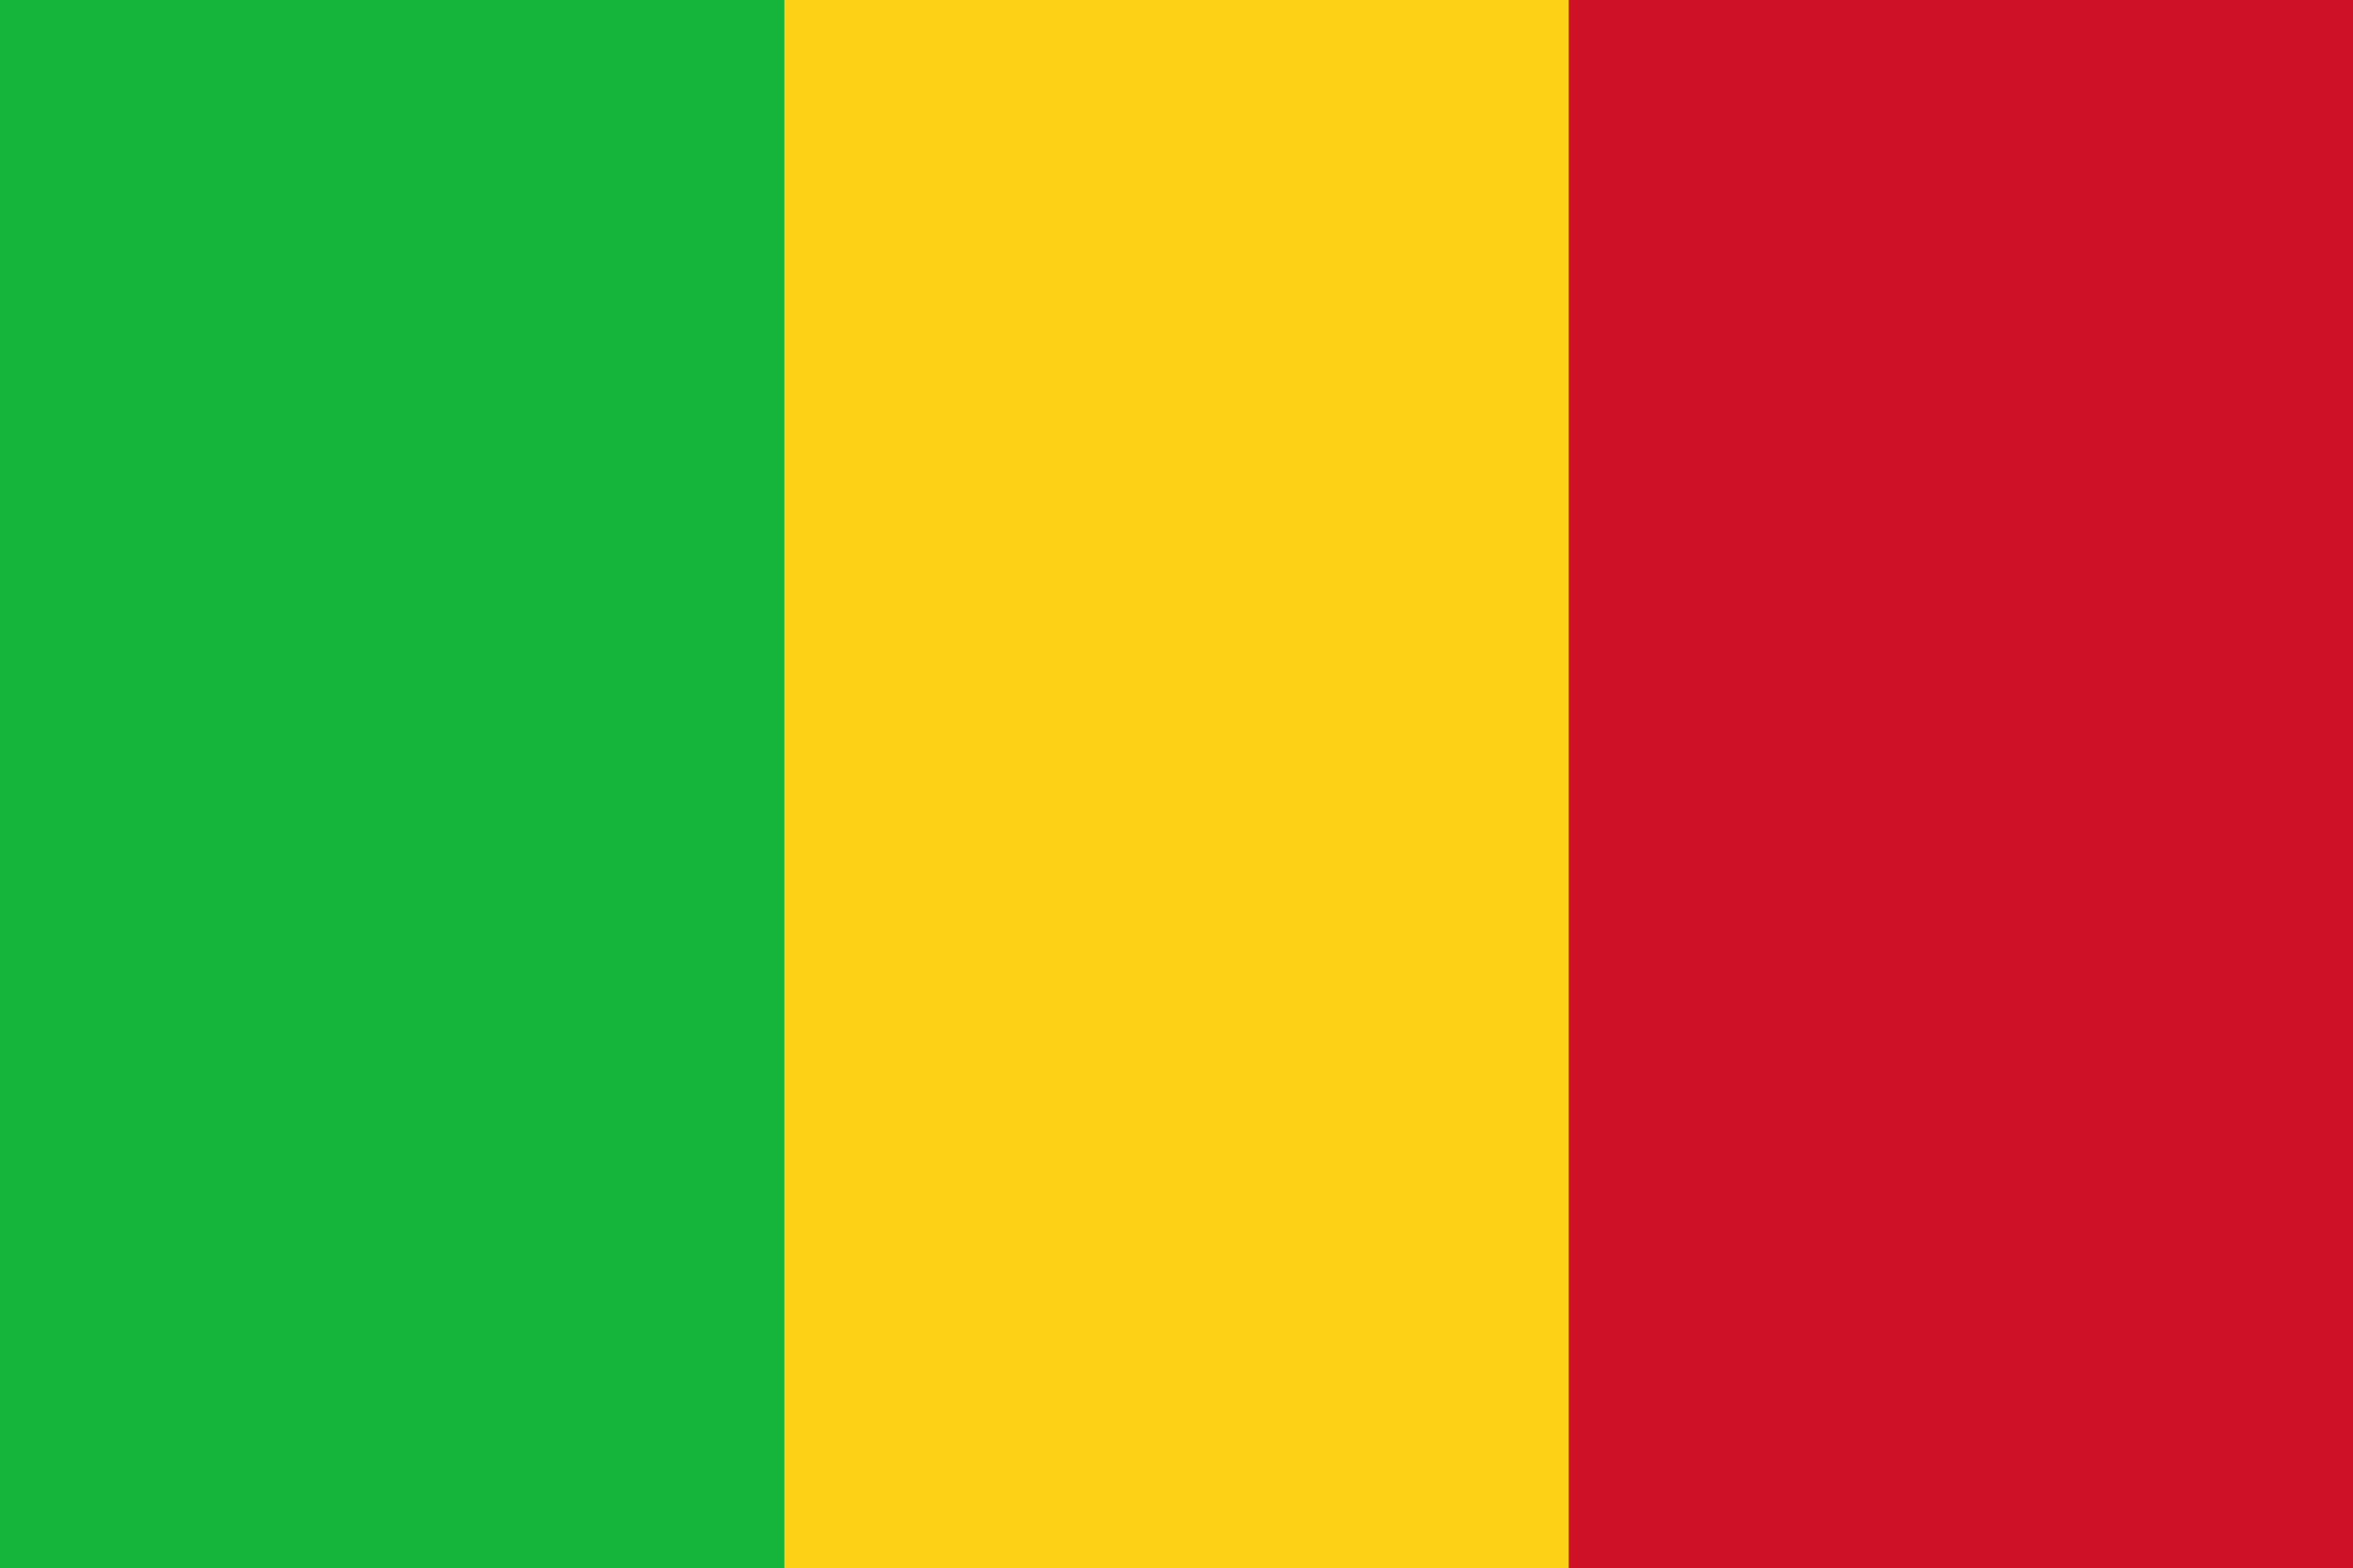 Mali Flag Image - Free Download